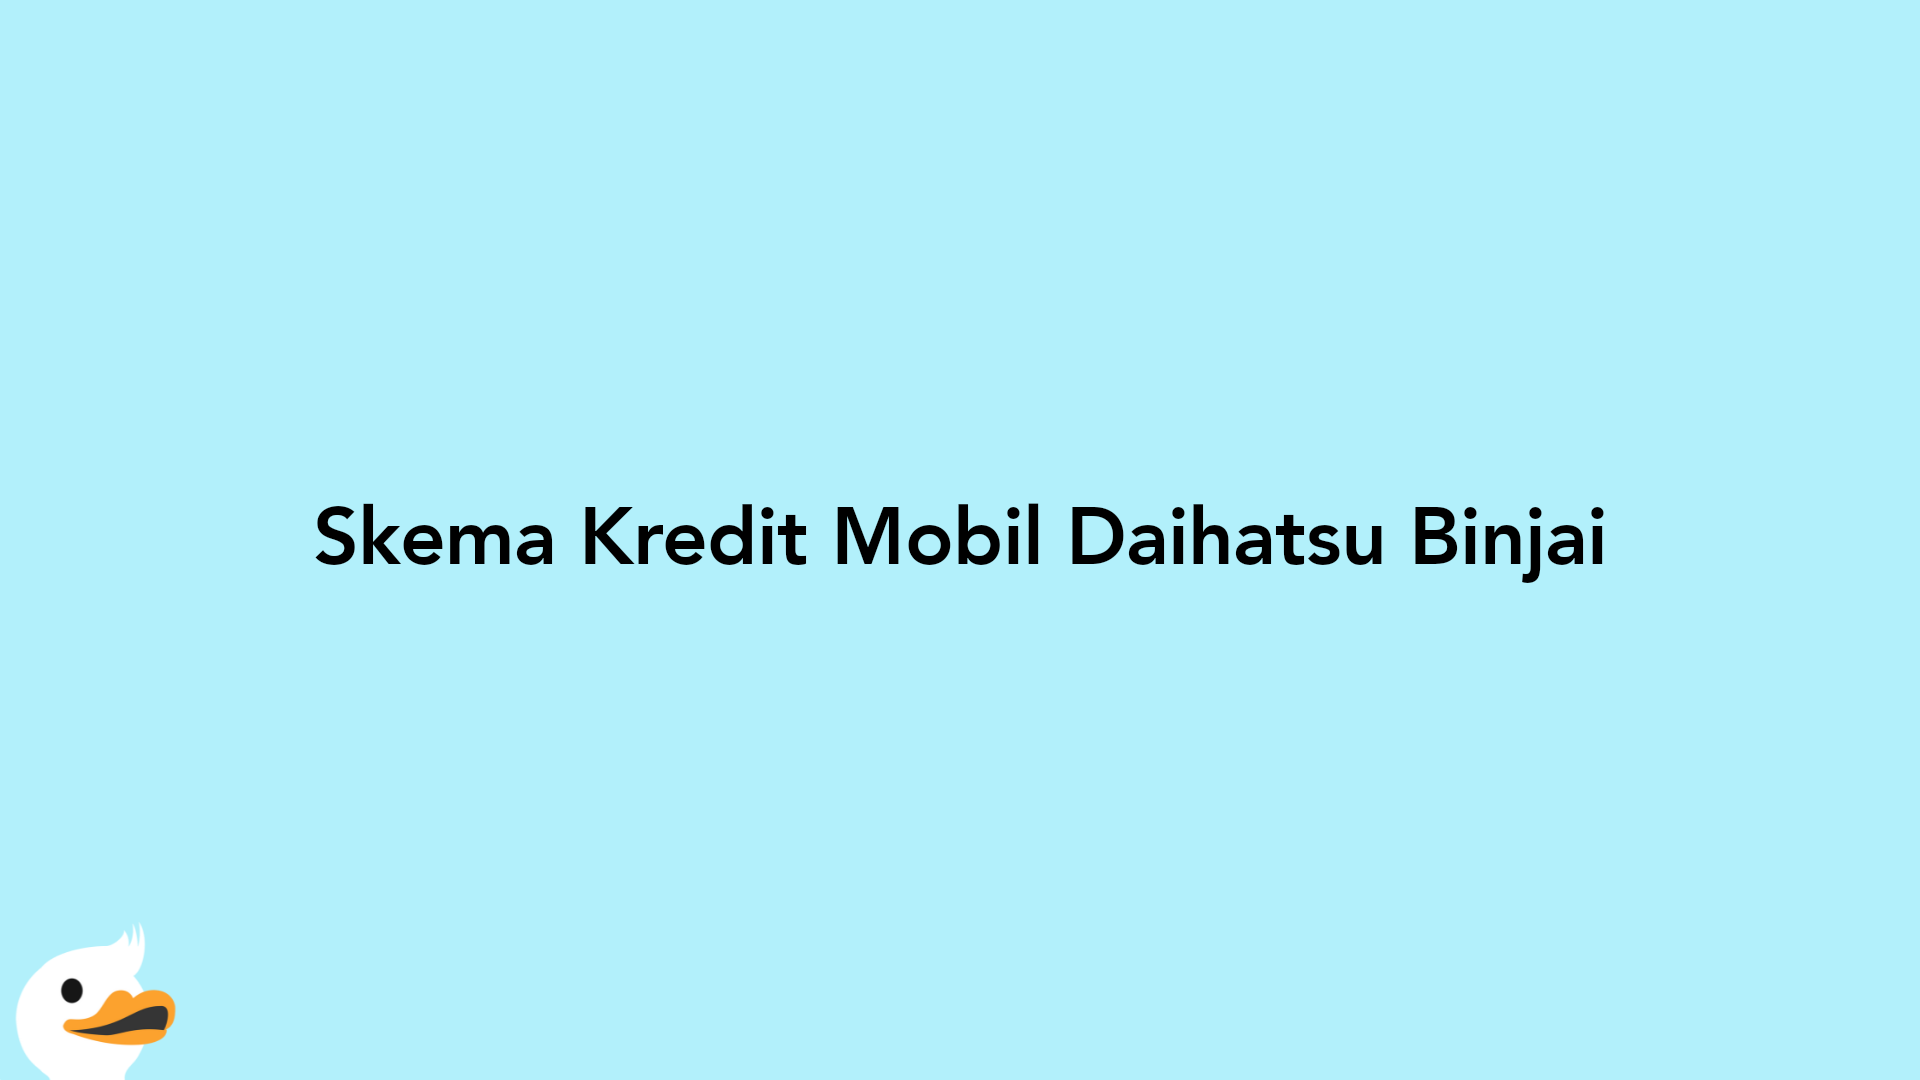 Skema Kredit Mobil Daihatsu Binjai